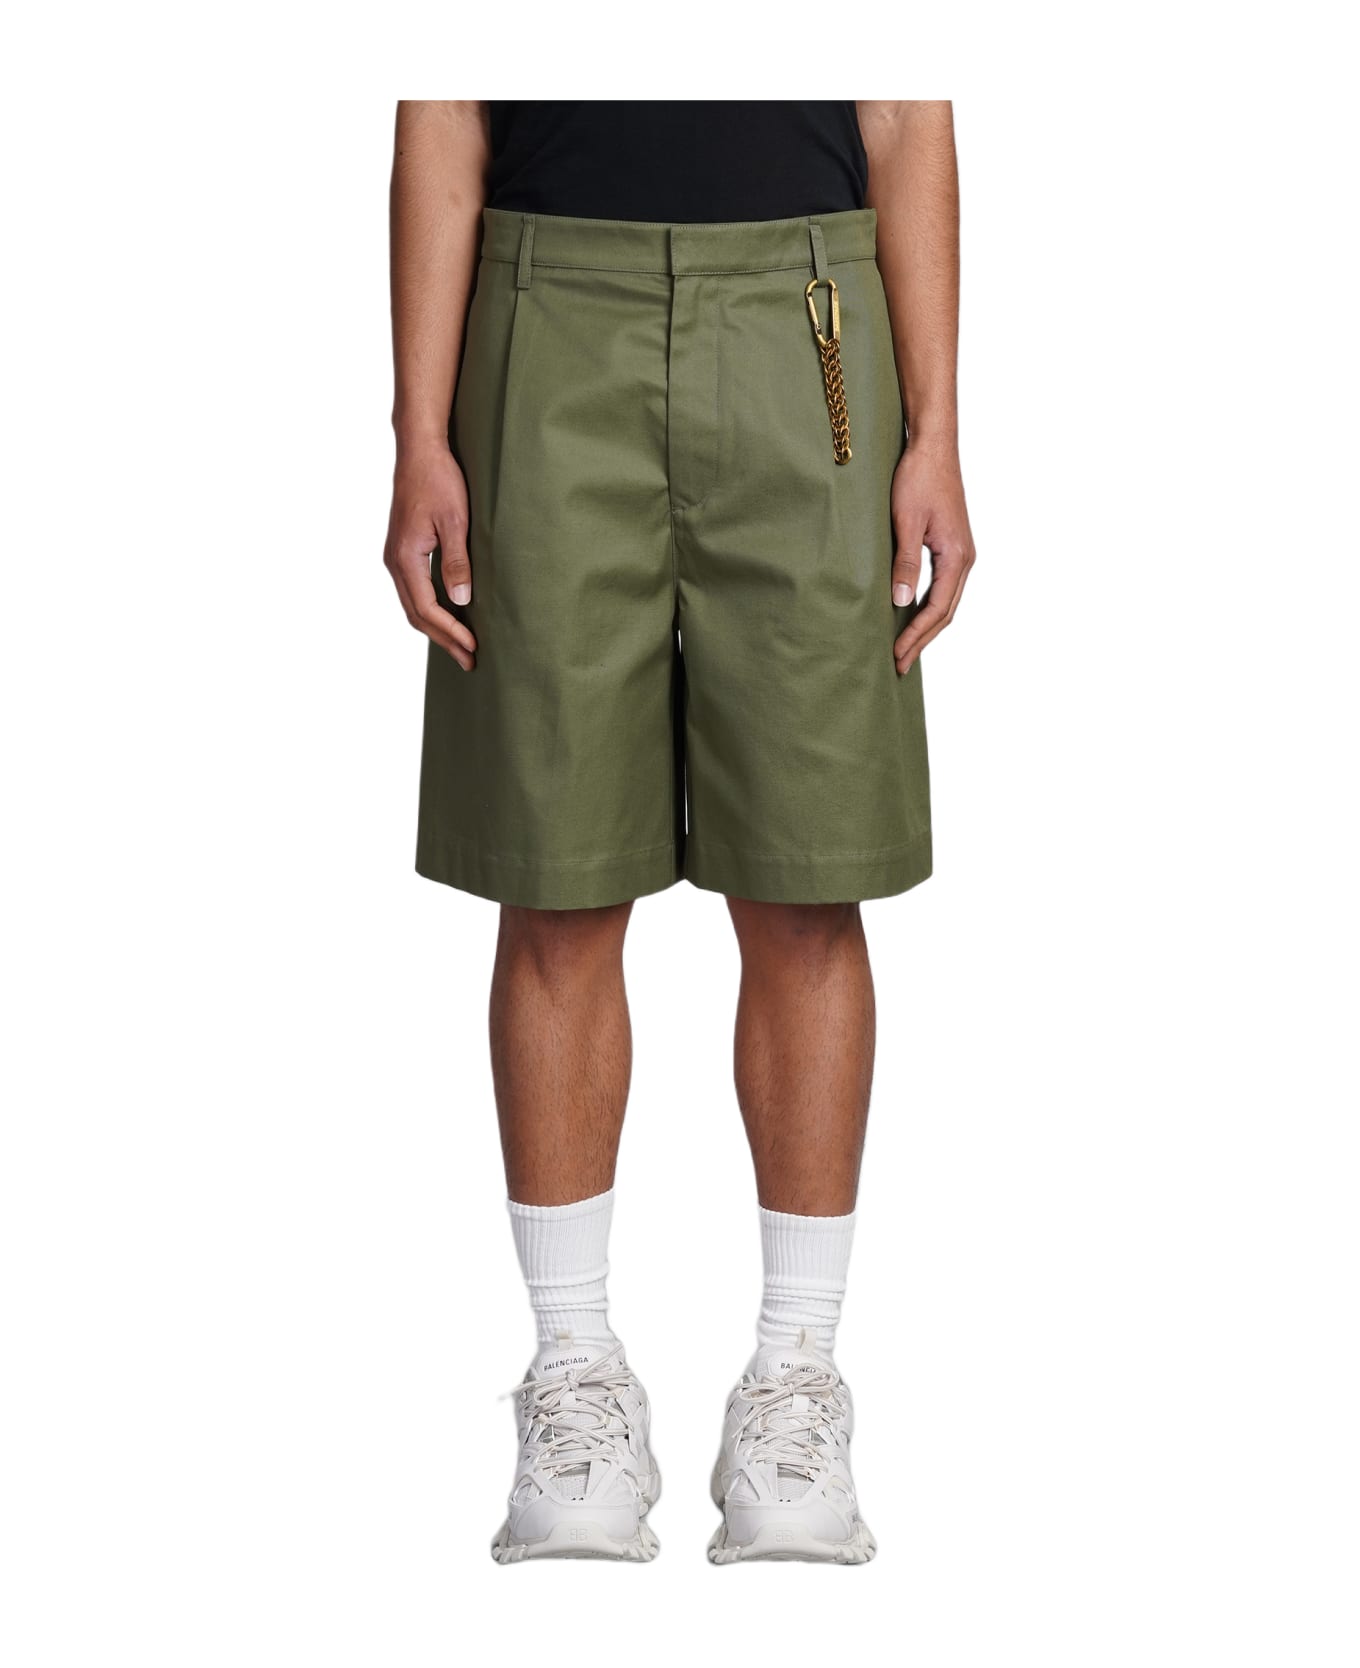 DARKPARK Saint Shorts In Green Cotton - green